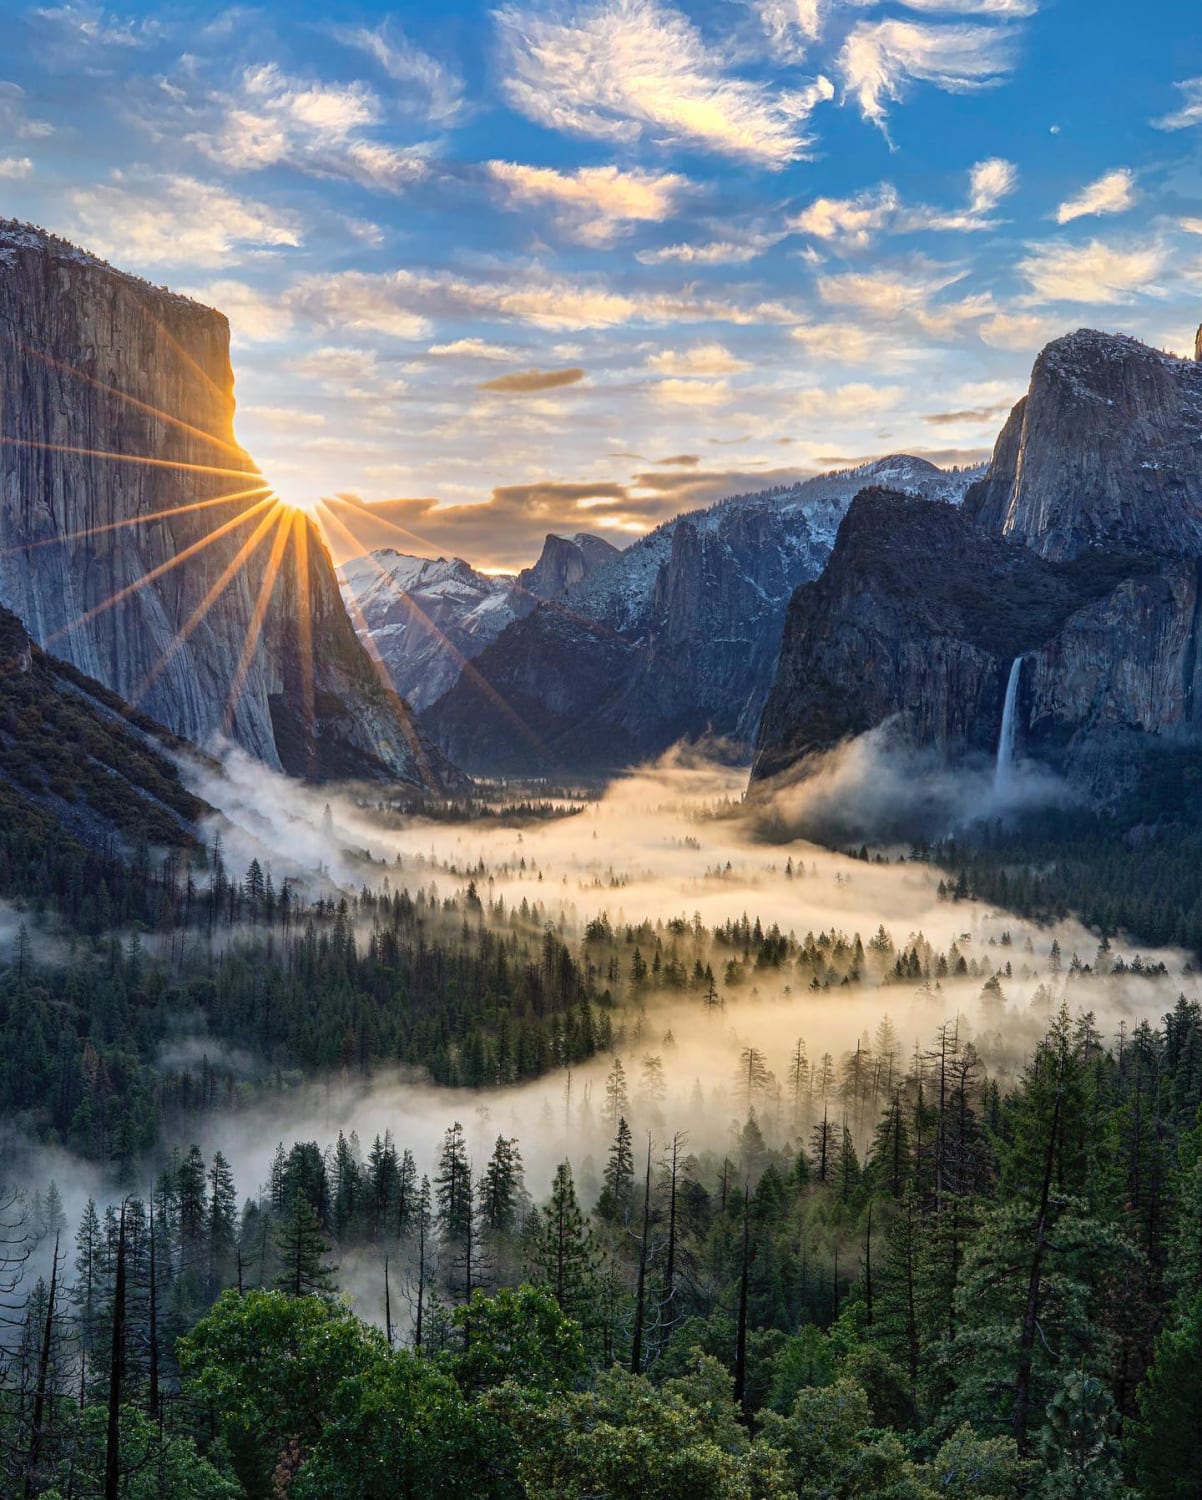 Sunrise over morning fog in Yosemite Valley, Yosemite National Park, California.